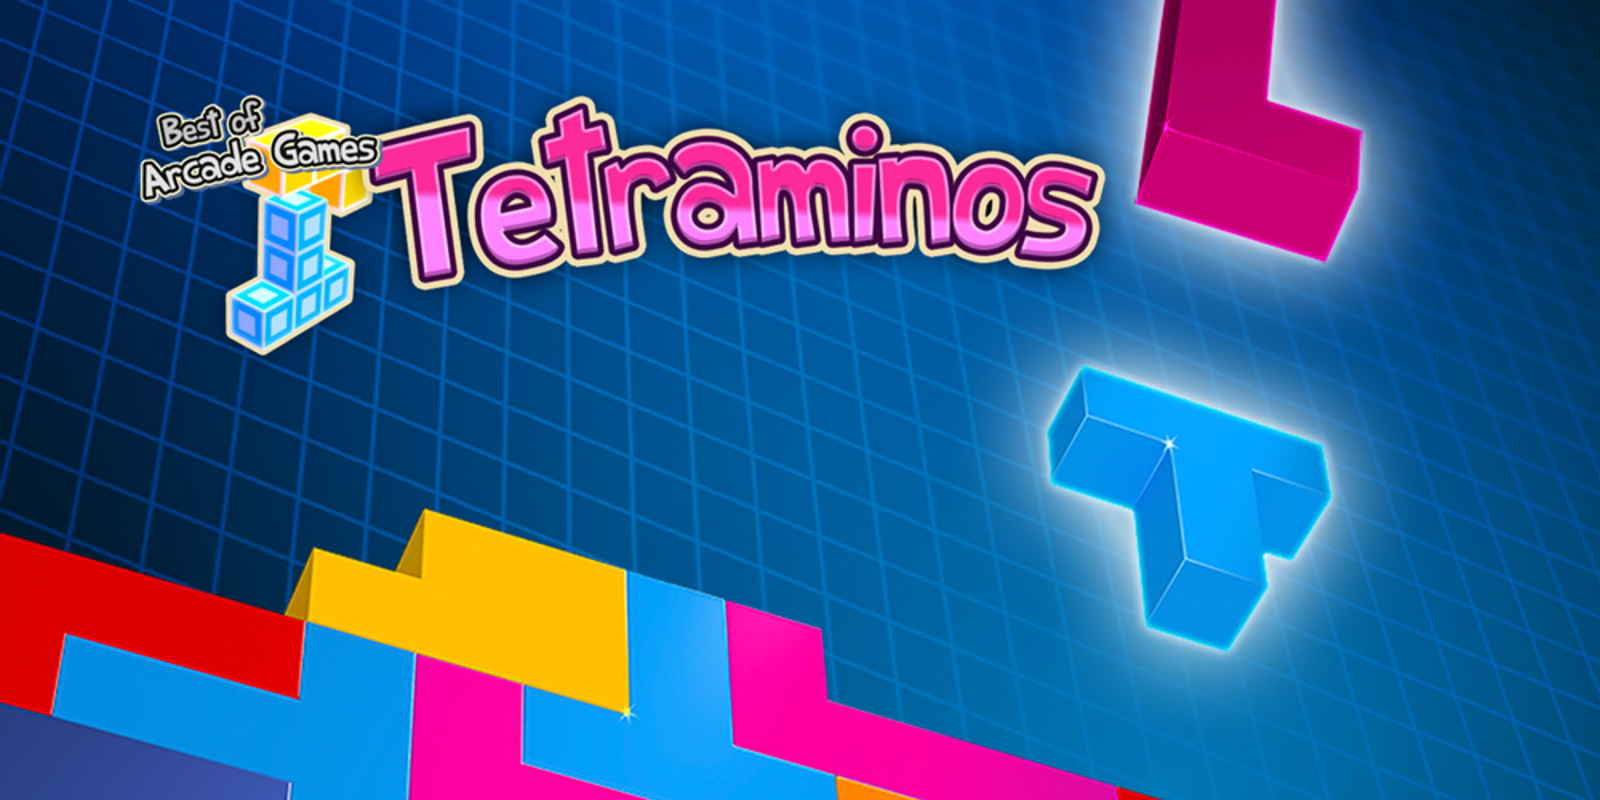 Best of Arcade Games – Tetraminos